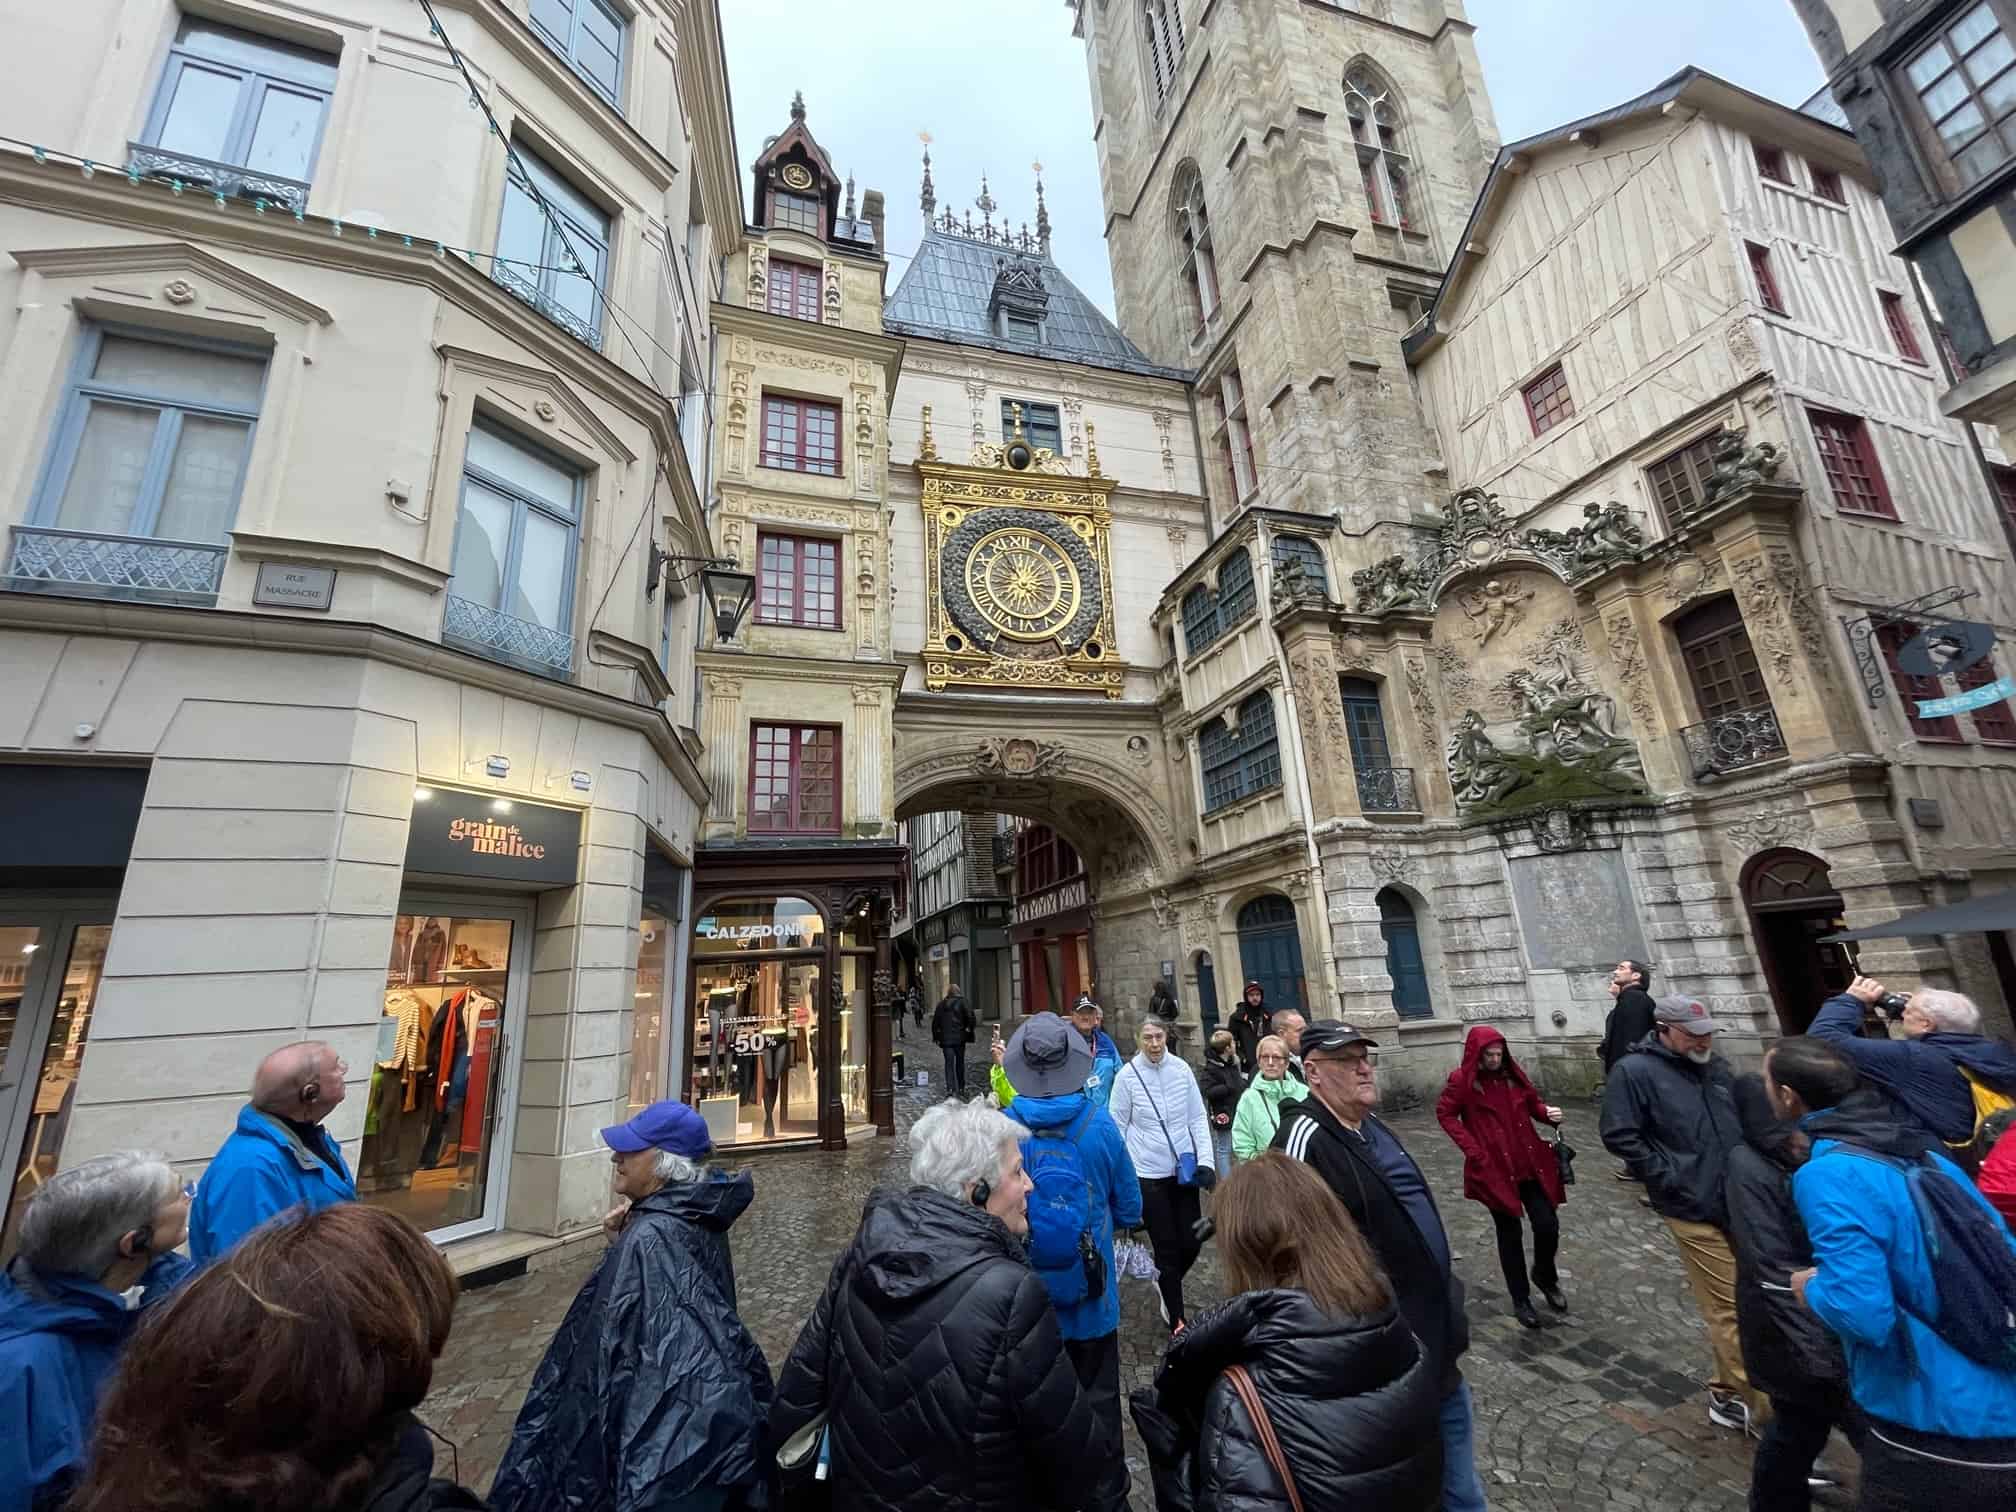 Medieval clock in Rouen